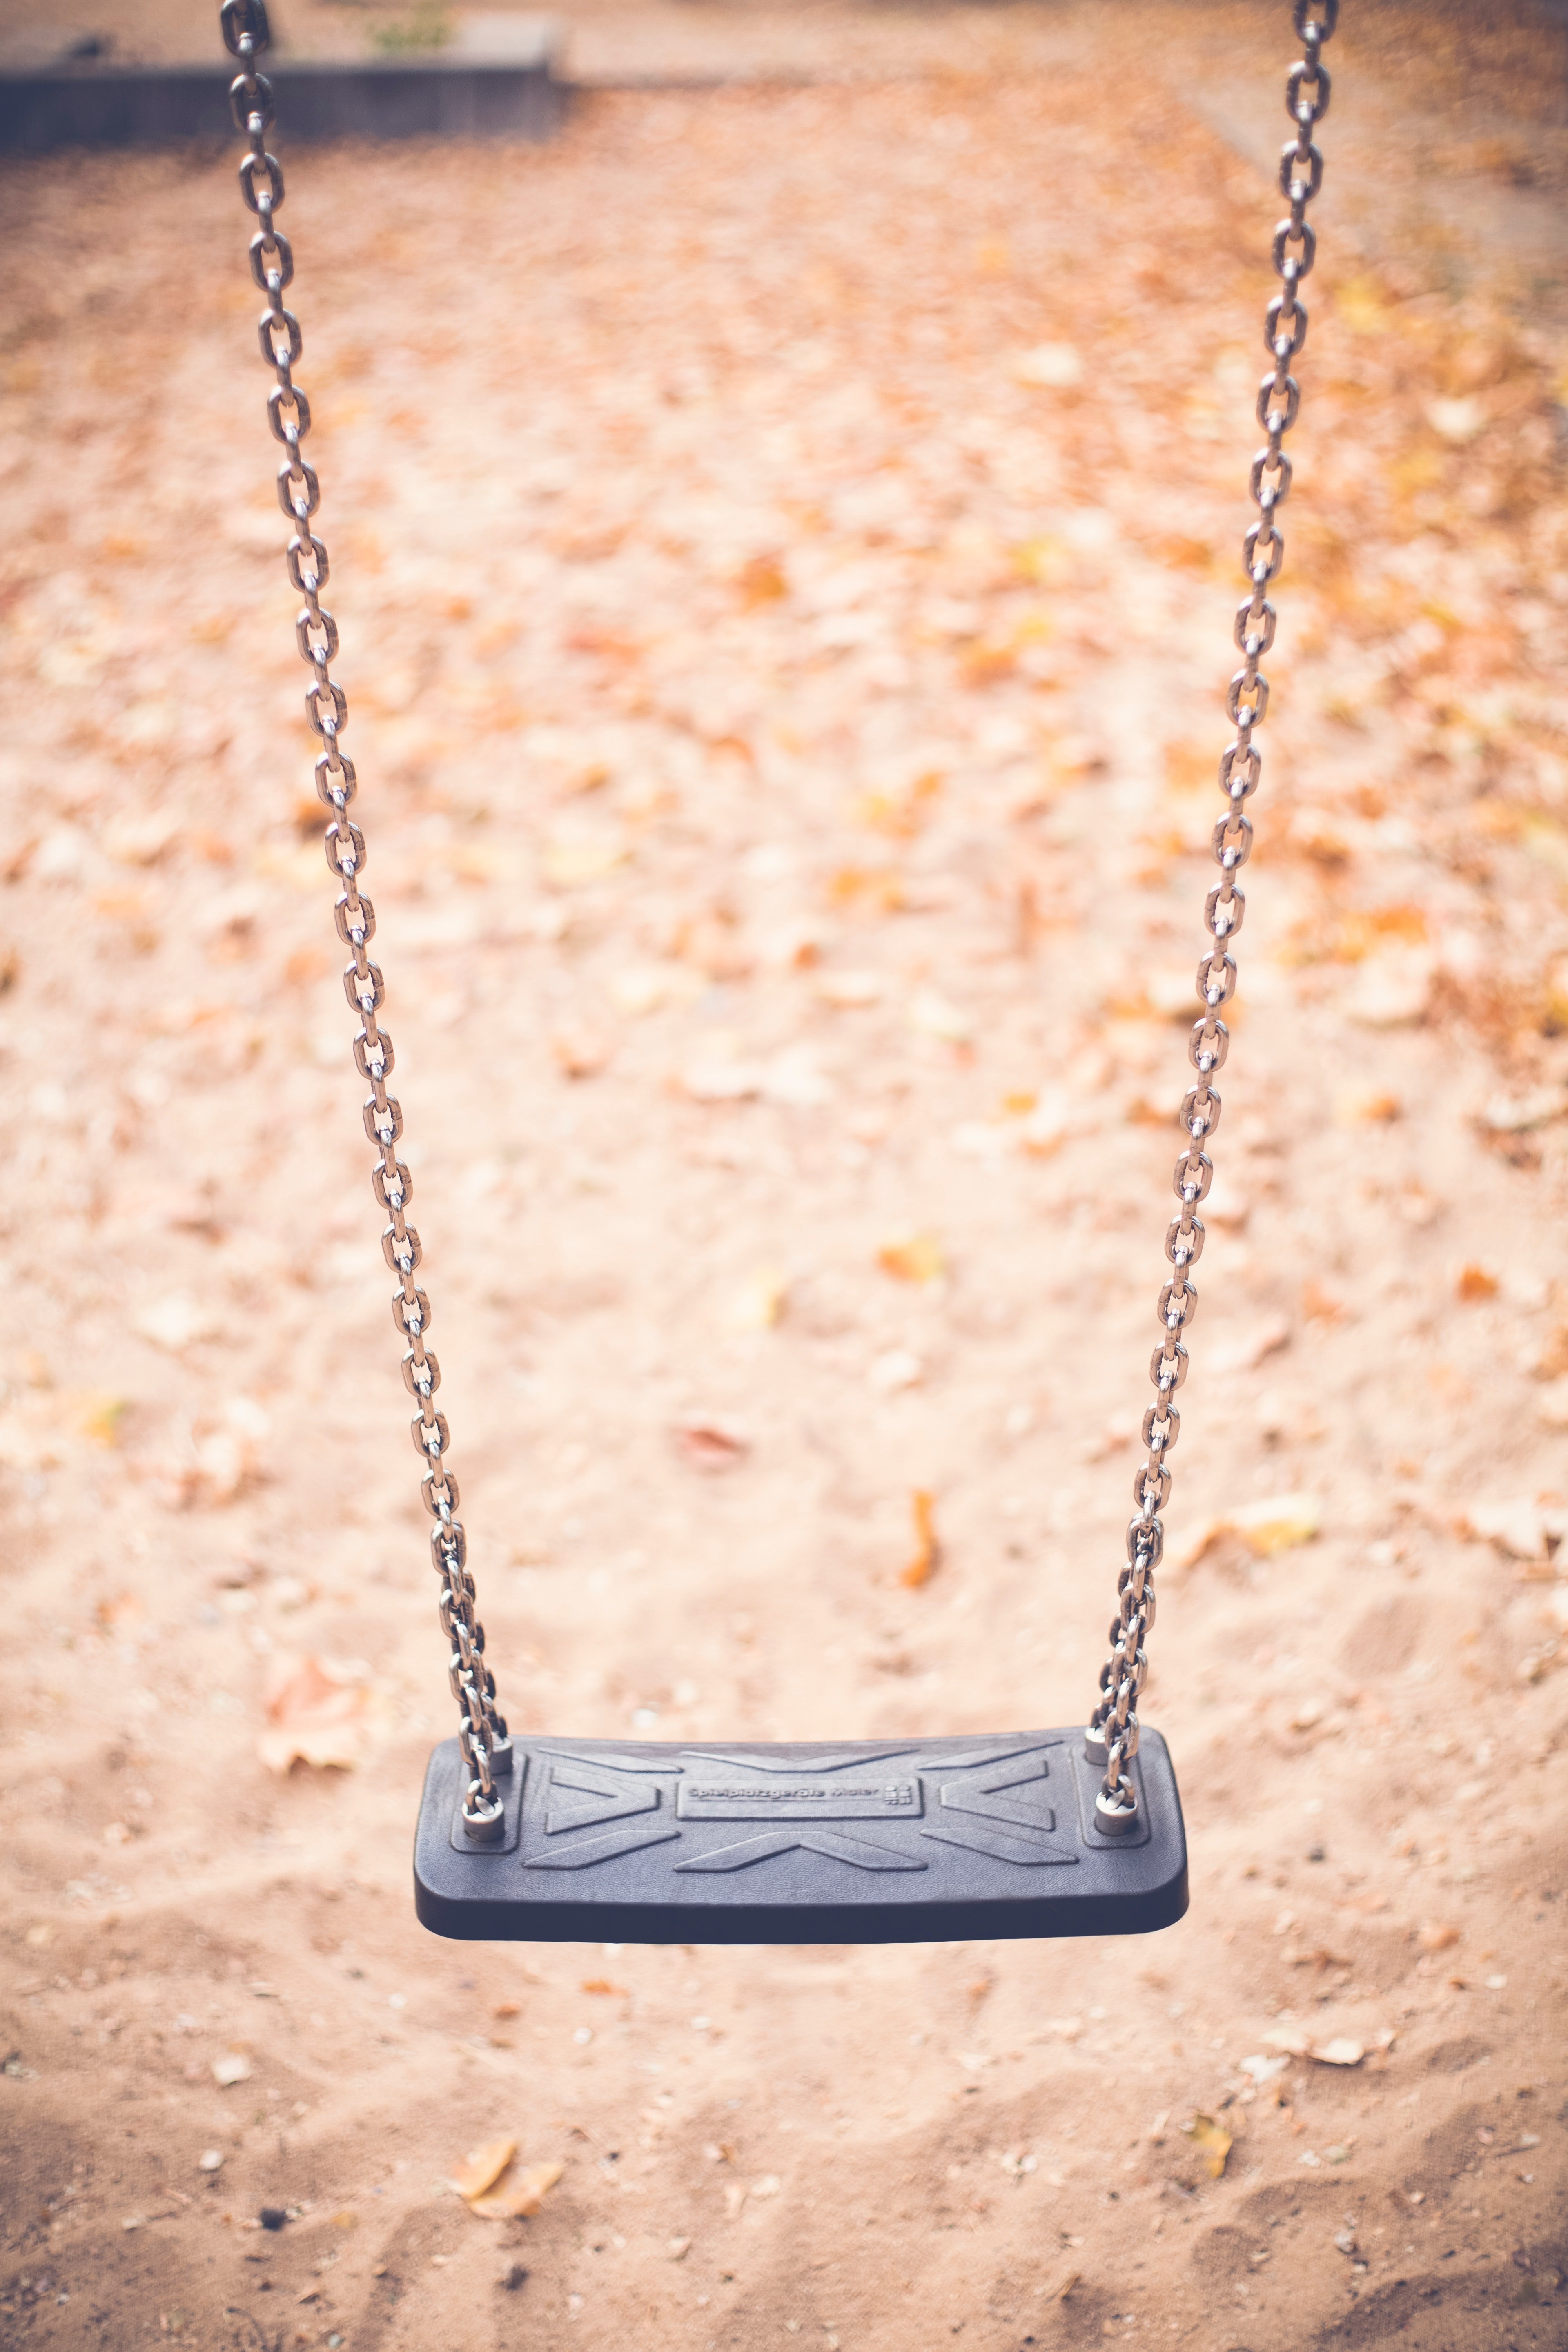 Melanie found the swing empty when she checked it. | Source: Unsplash